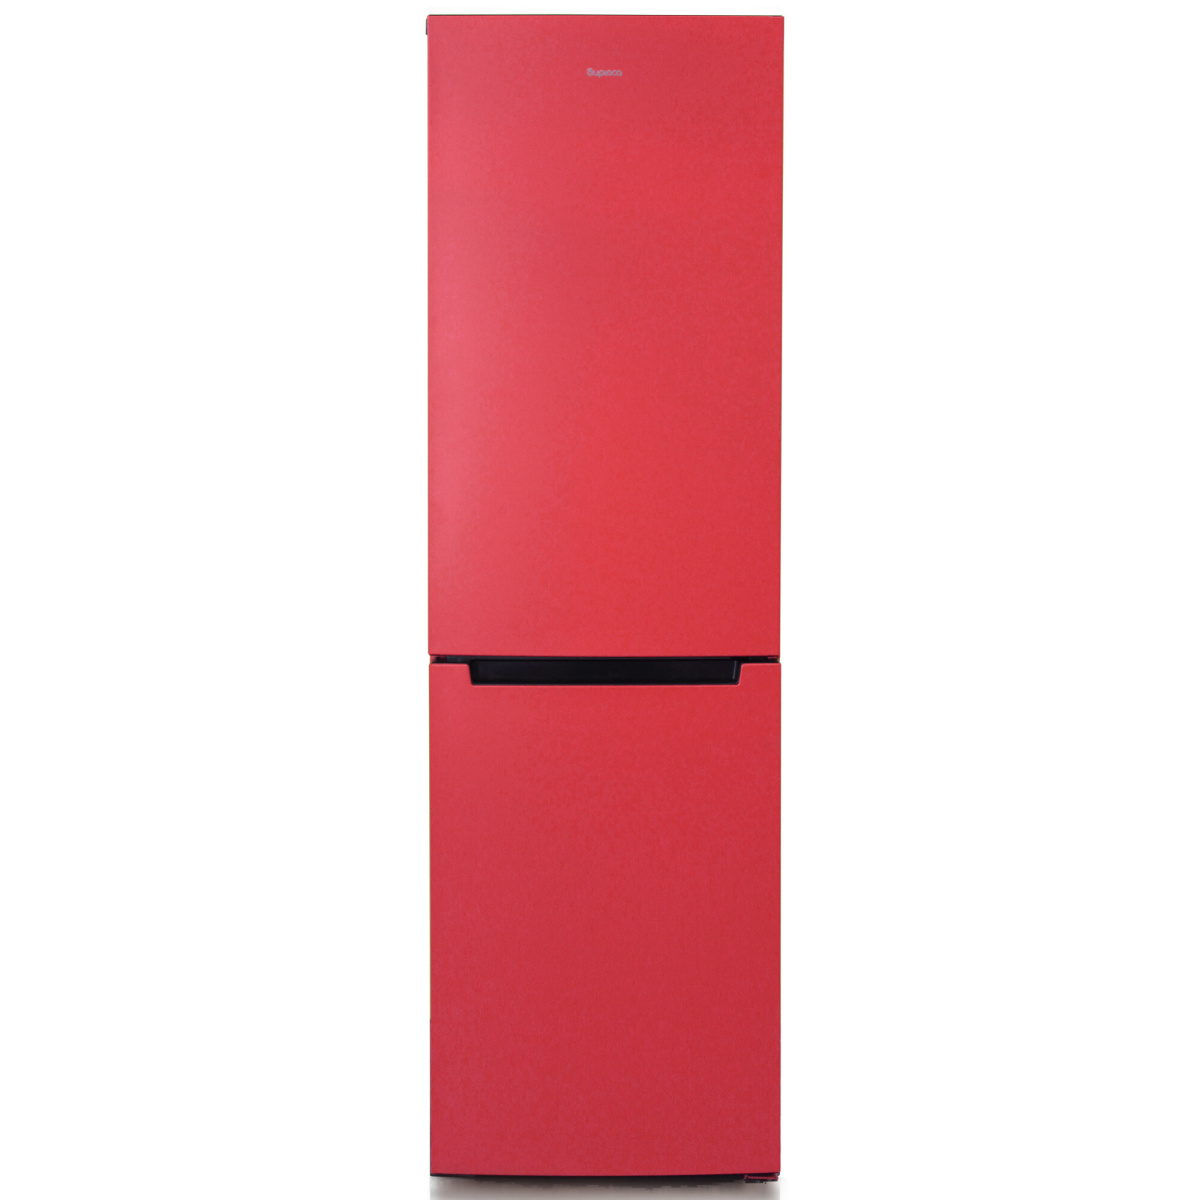 Холодильник бирюса 880nf. Холодильник Бирюса h860nf красный. Холодильник Бирюса w880nf. Бирюса 860nf. Бирюса 880nf.